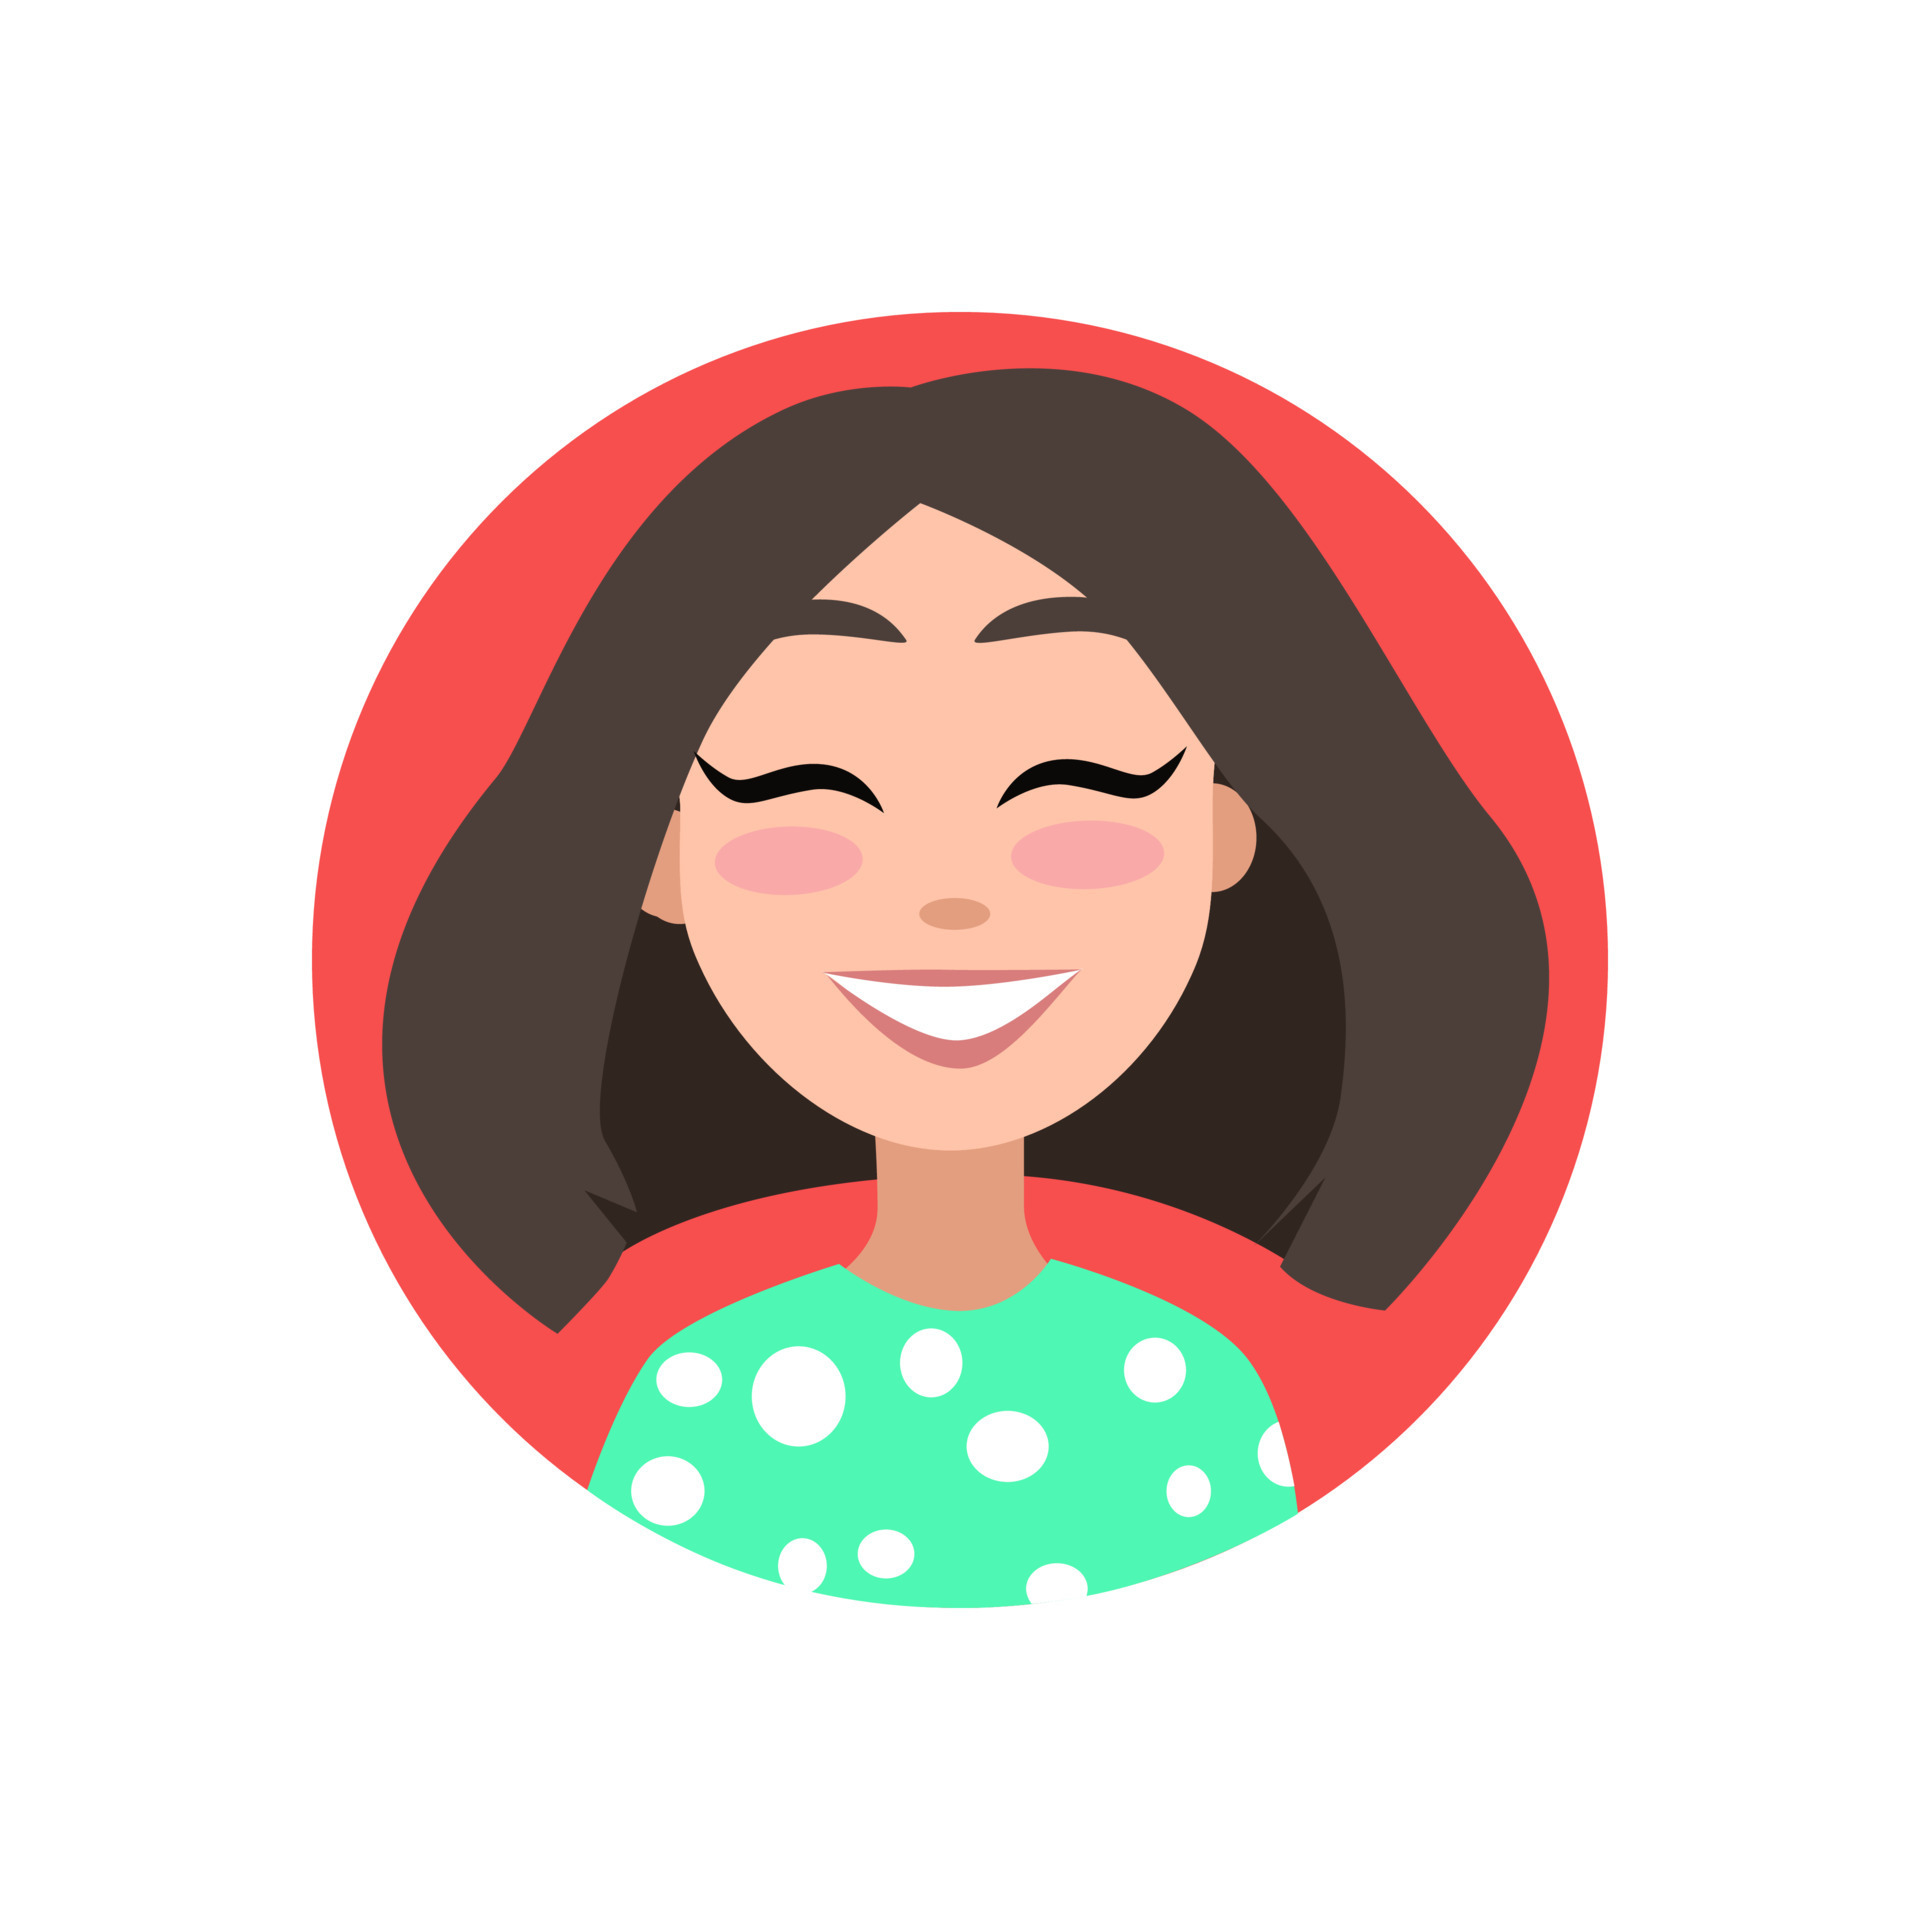 Woman avatar profile Royalty Free Vector Image